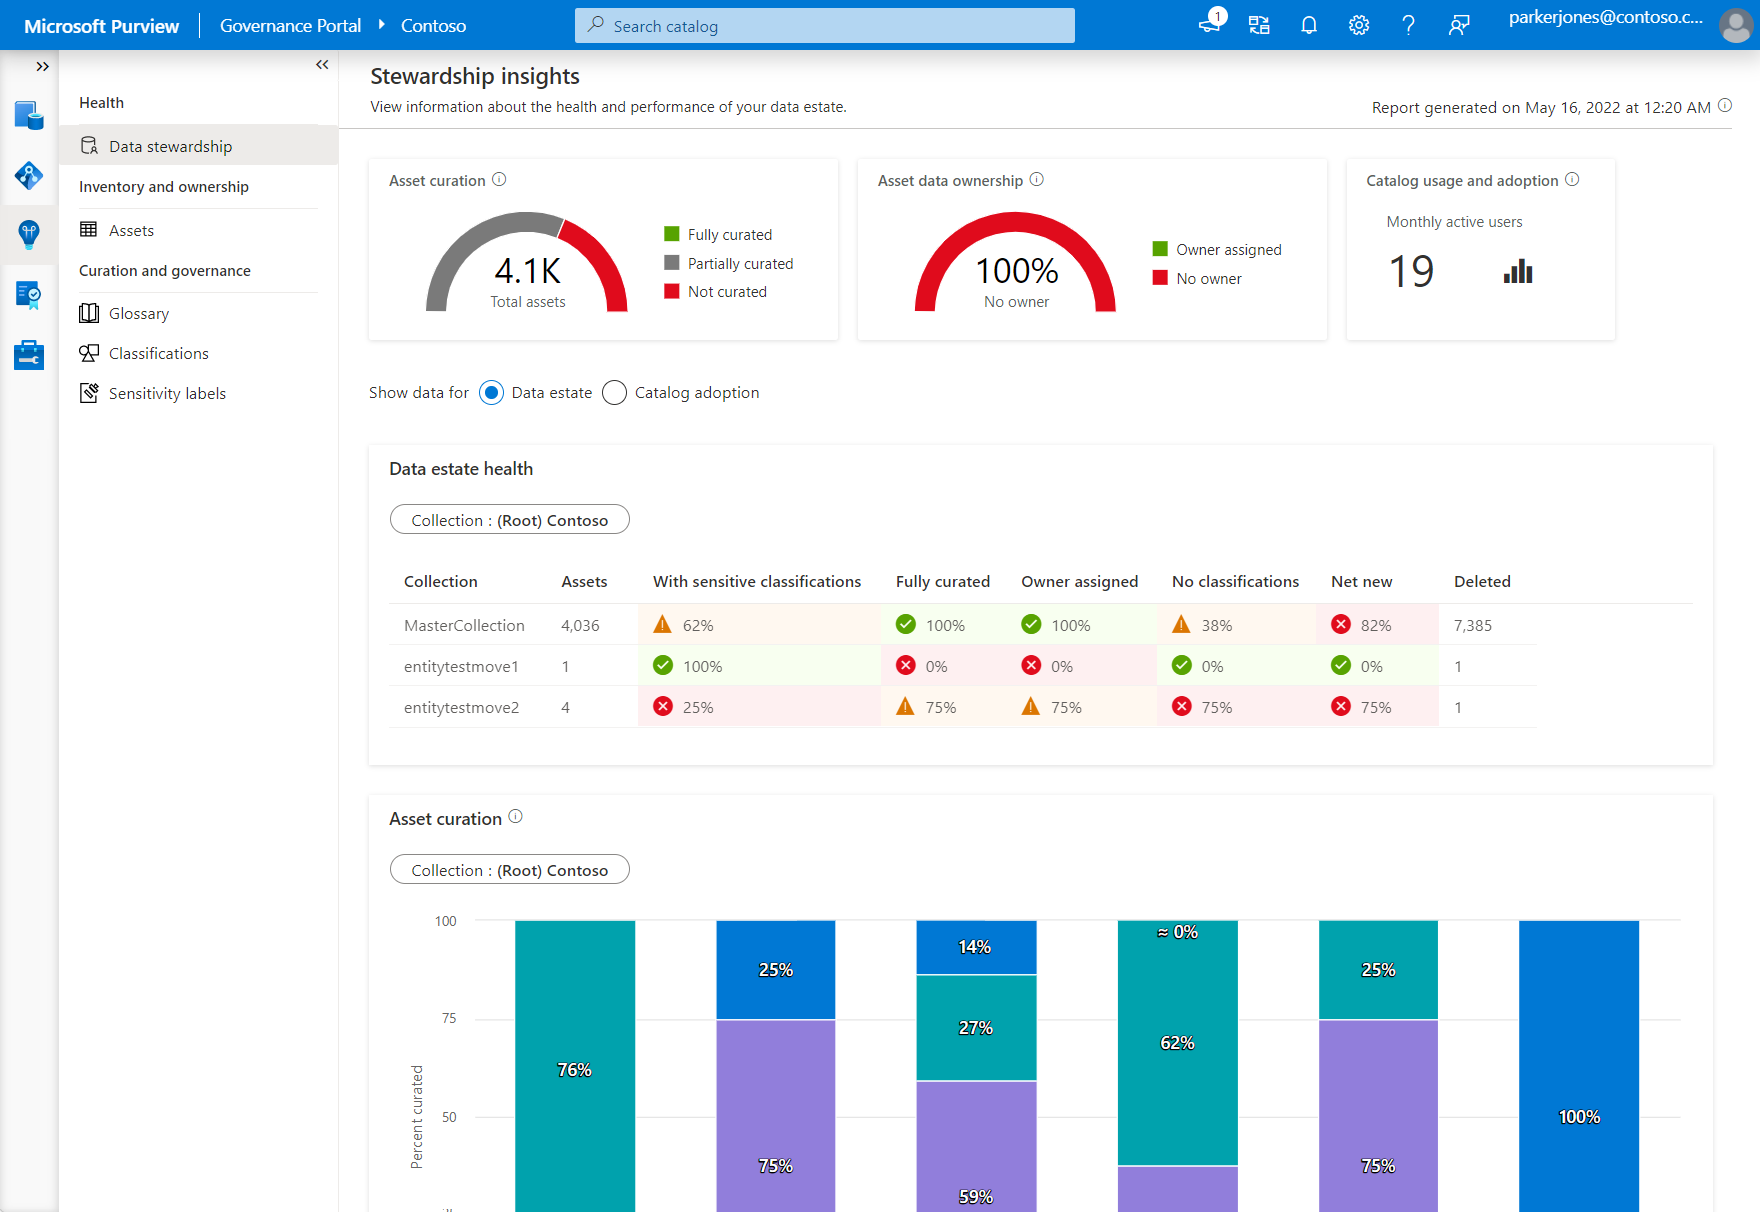 Microsoft Purview Dashboard Data Estate Insights